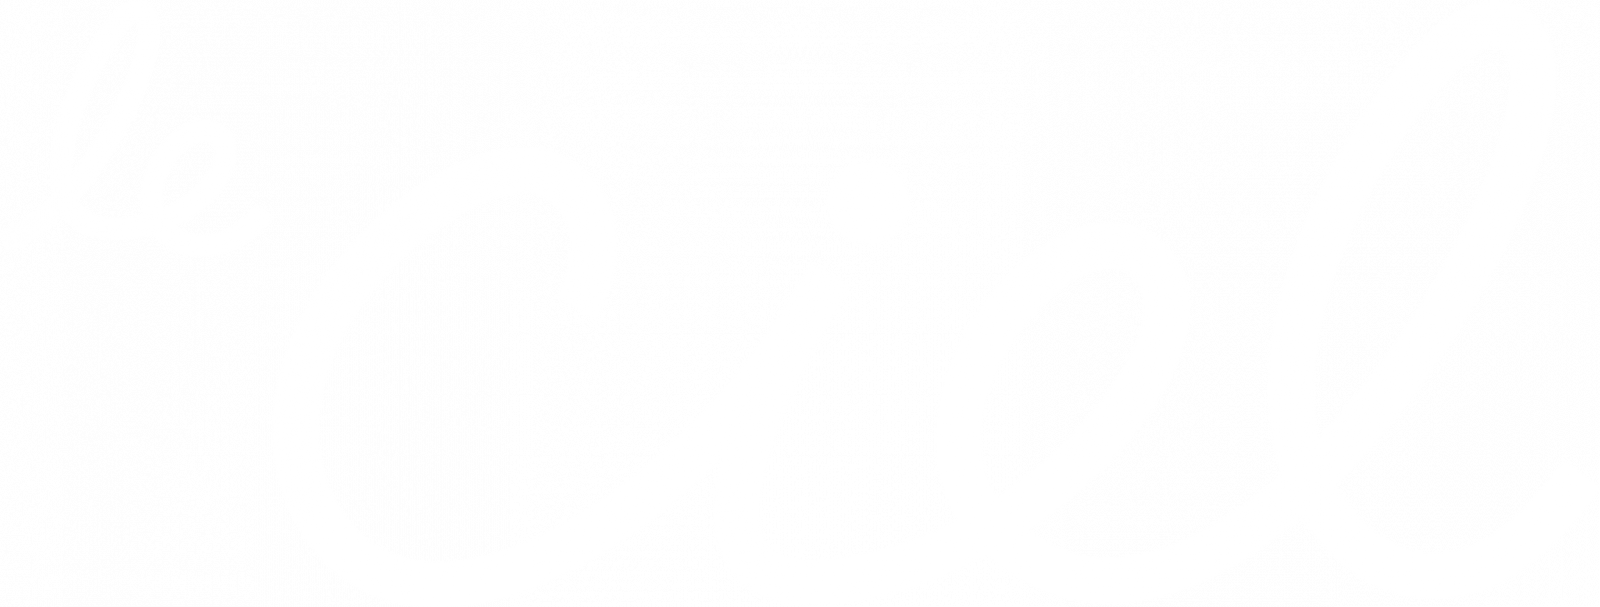 Logo de "Le CIEL"